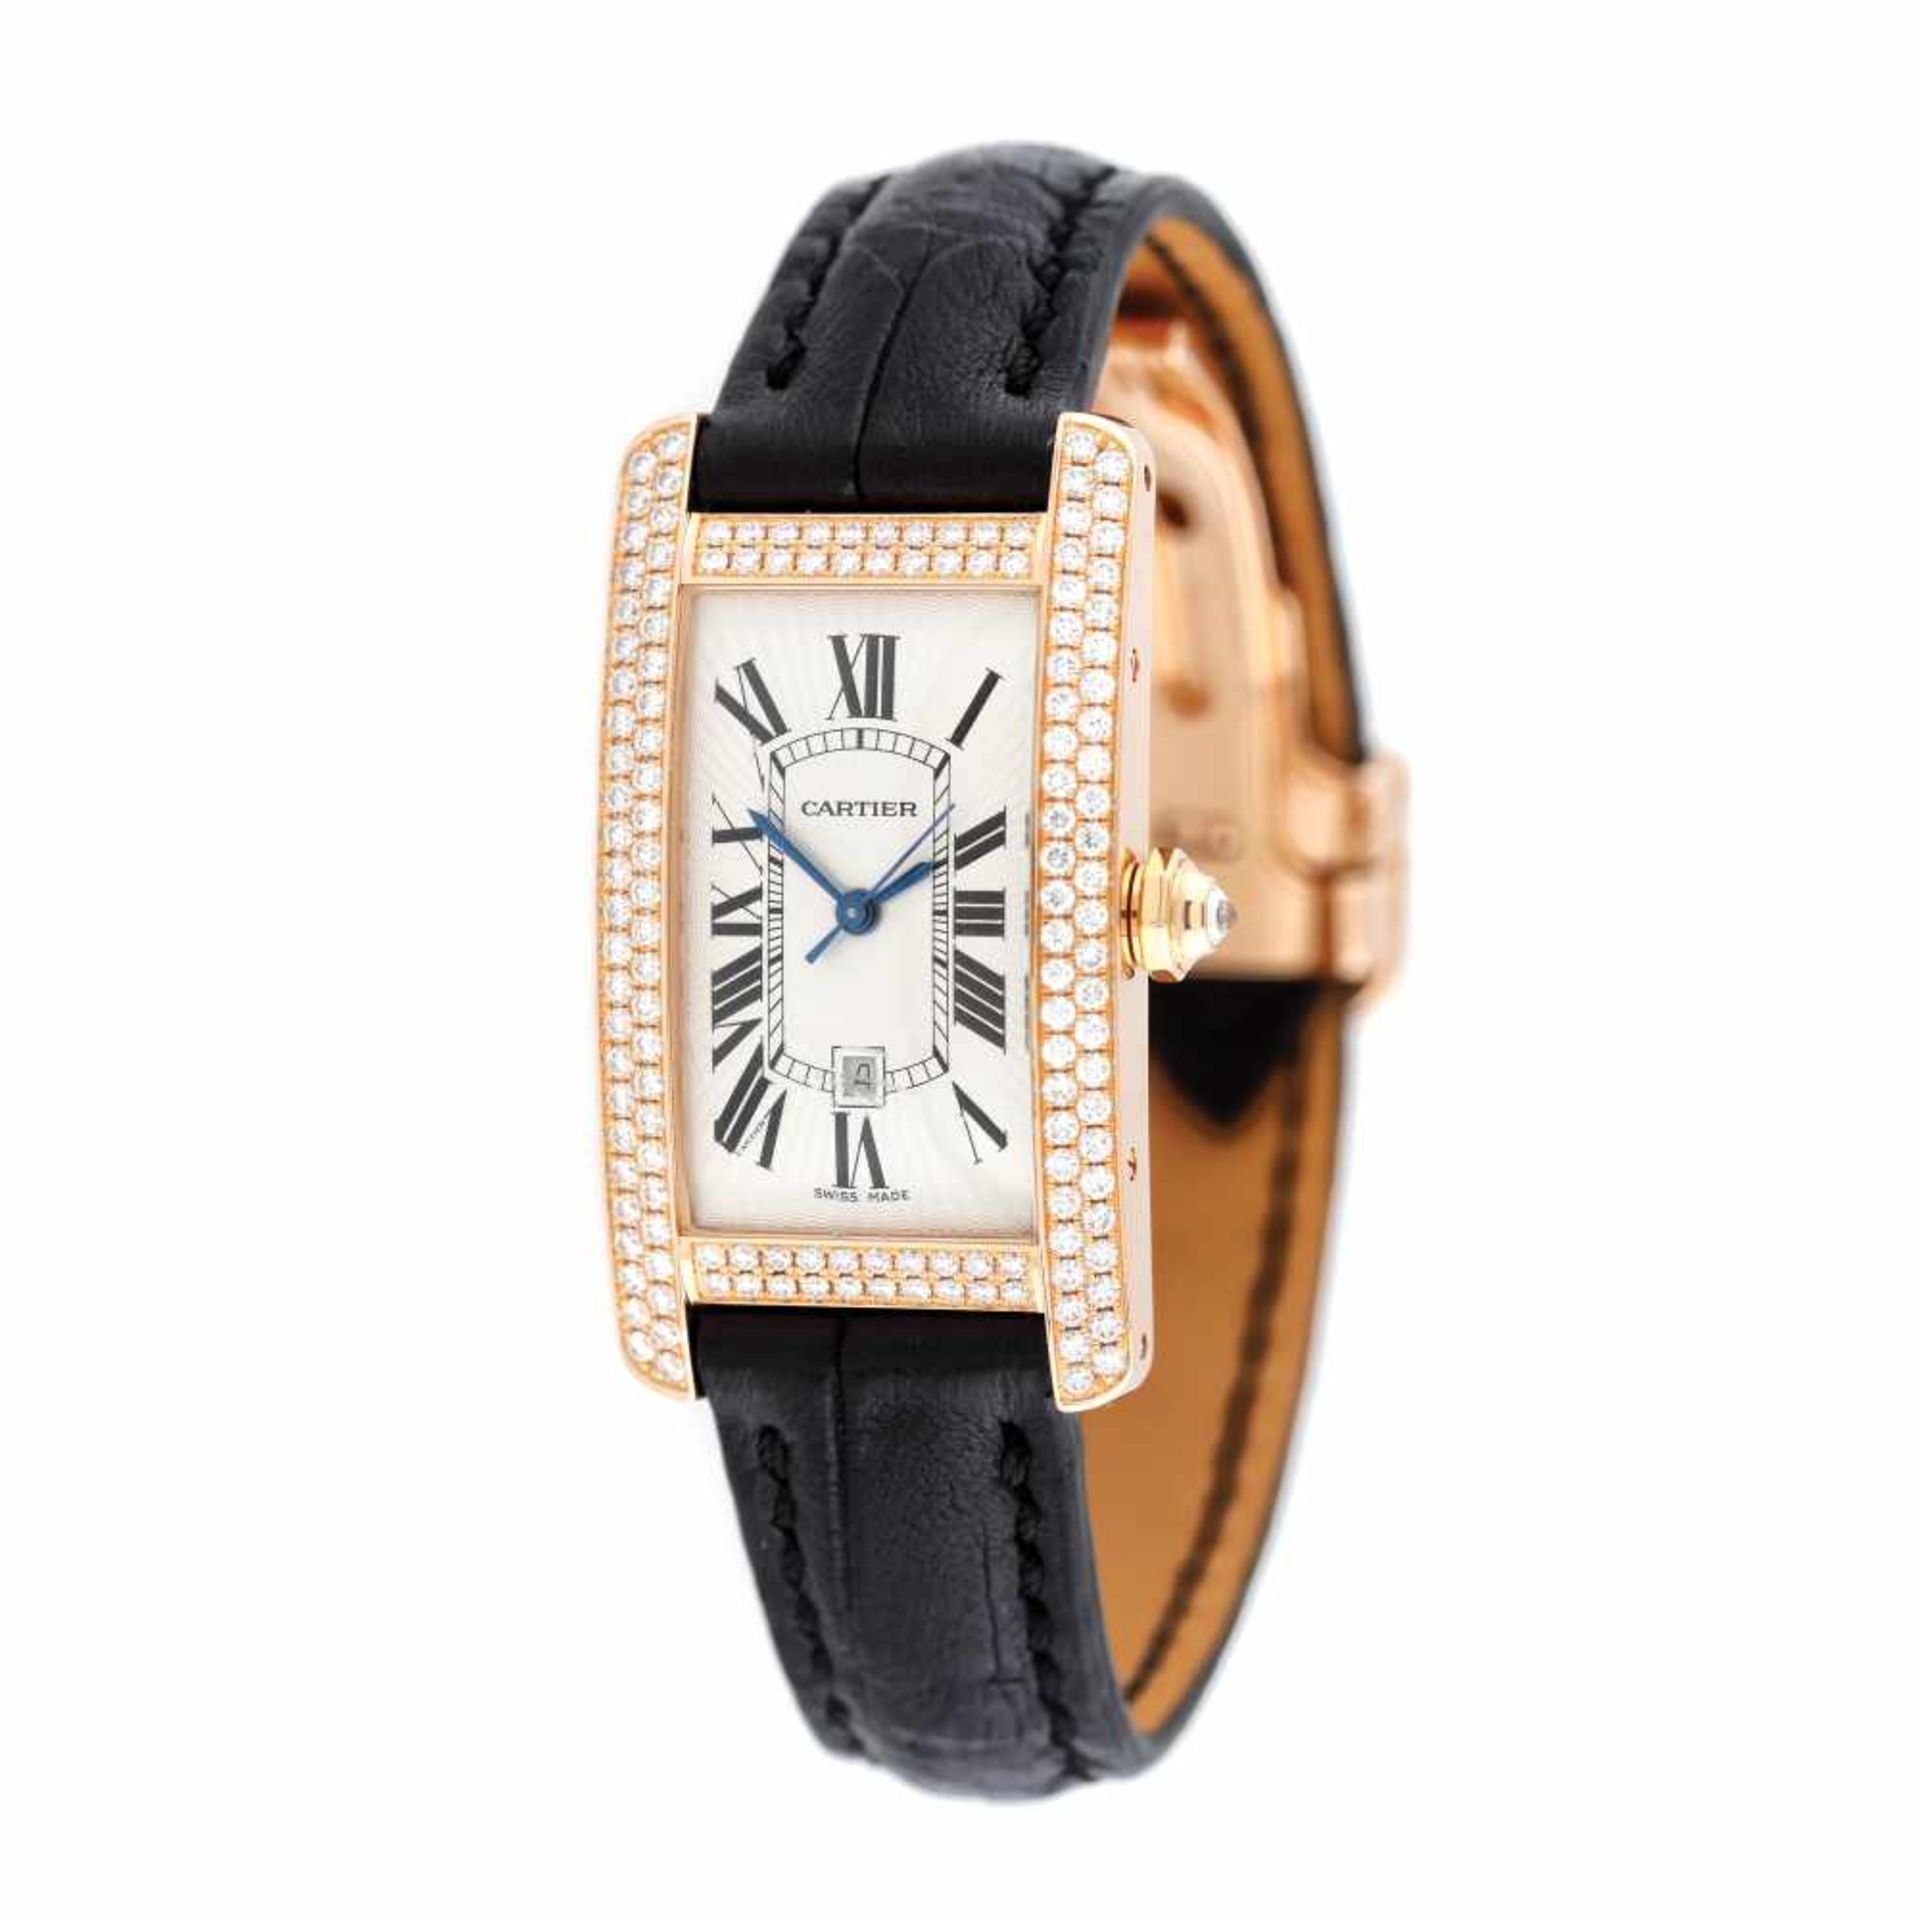 Cartier Tank Américaine wristwatch, rose gold, diamond-paved bezel, women, provenance documents and